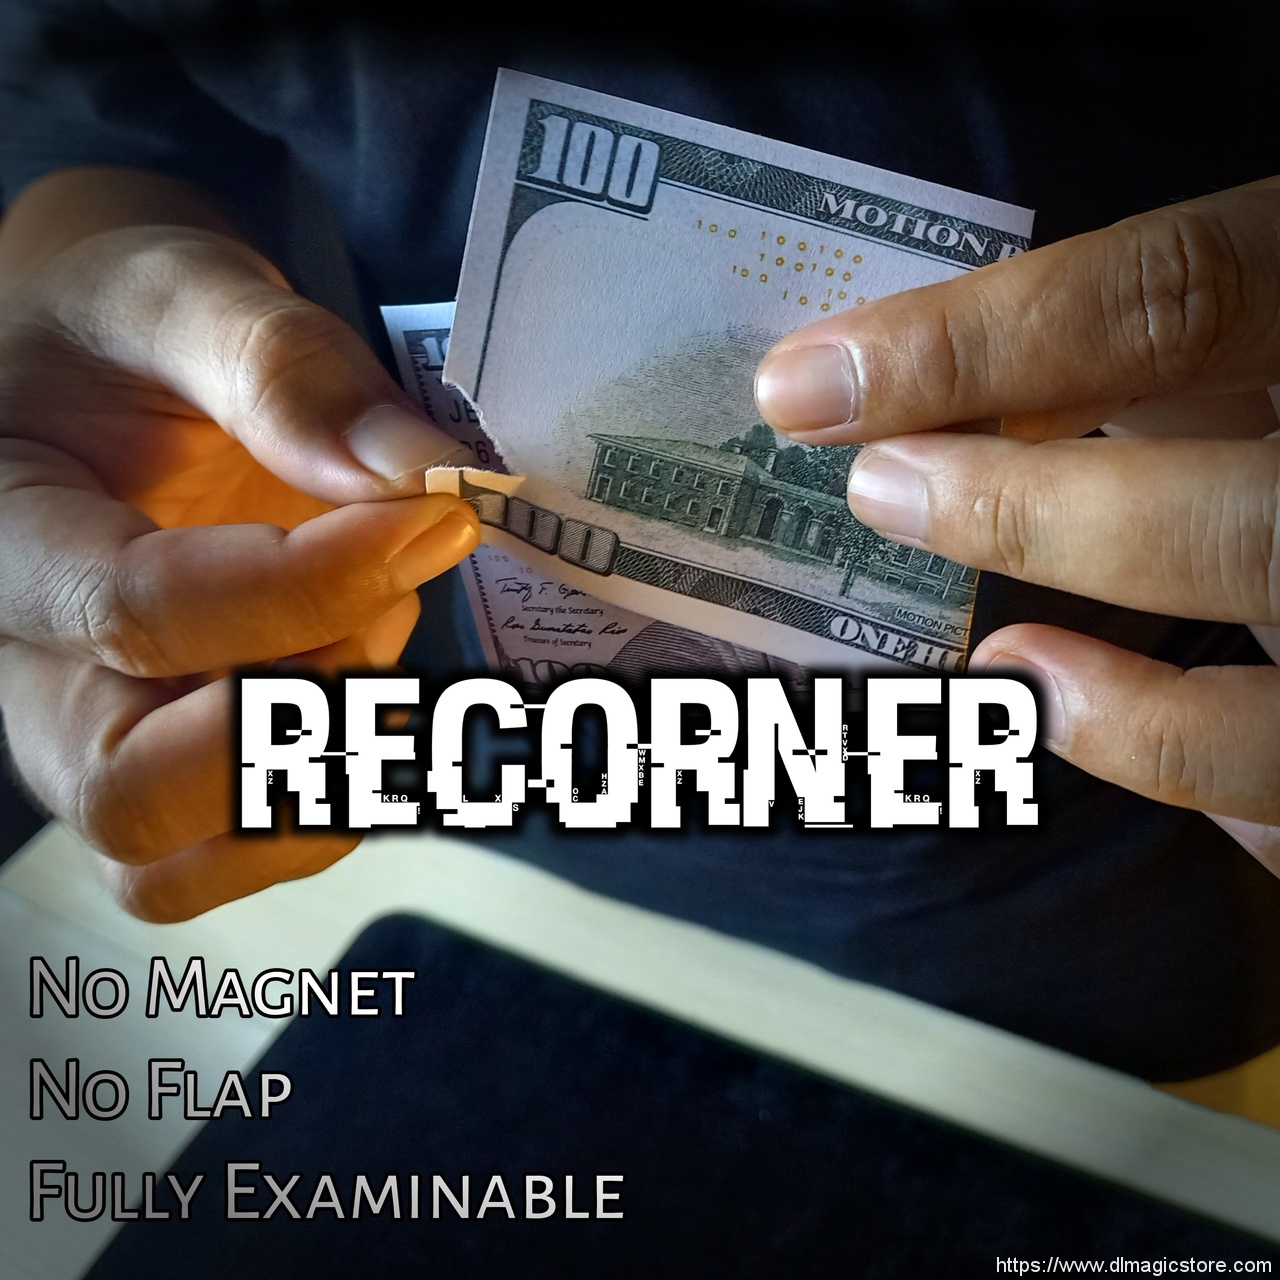 Recorner by Vix (Instant Download)